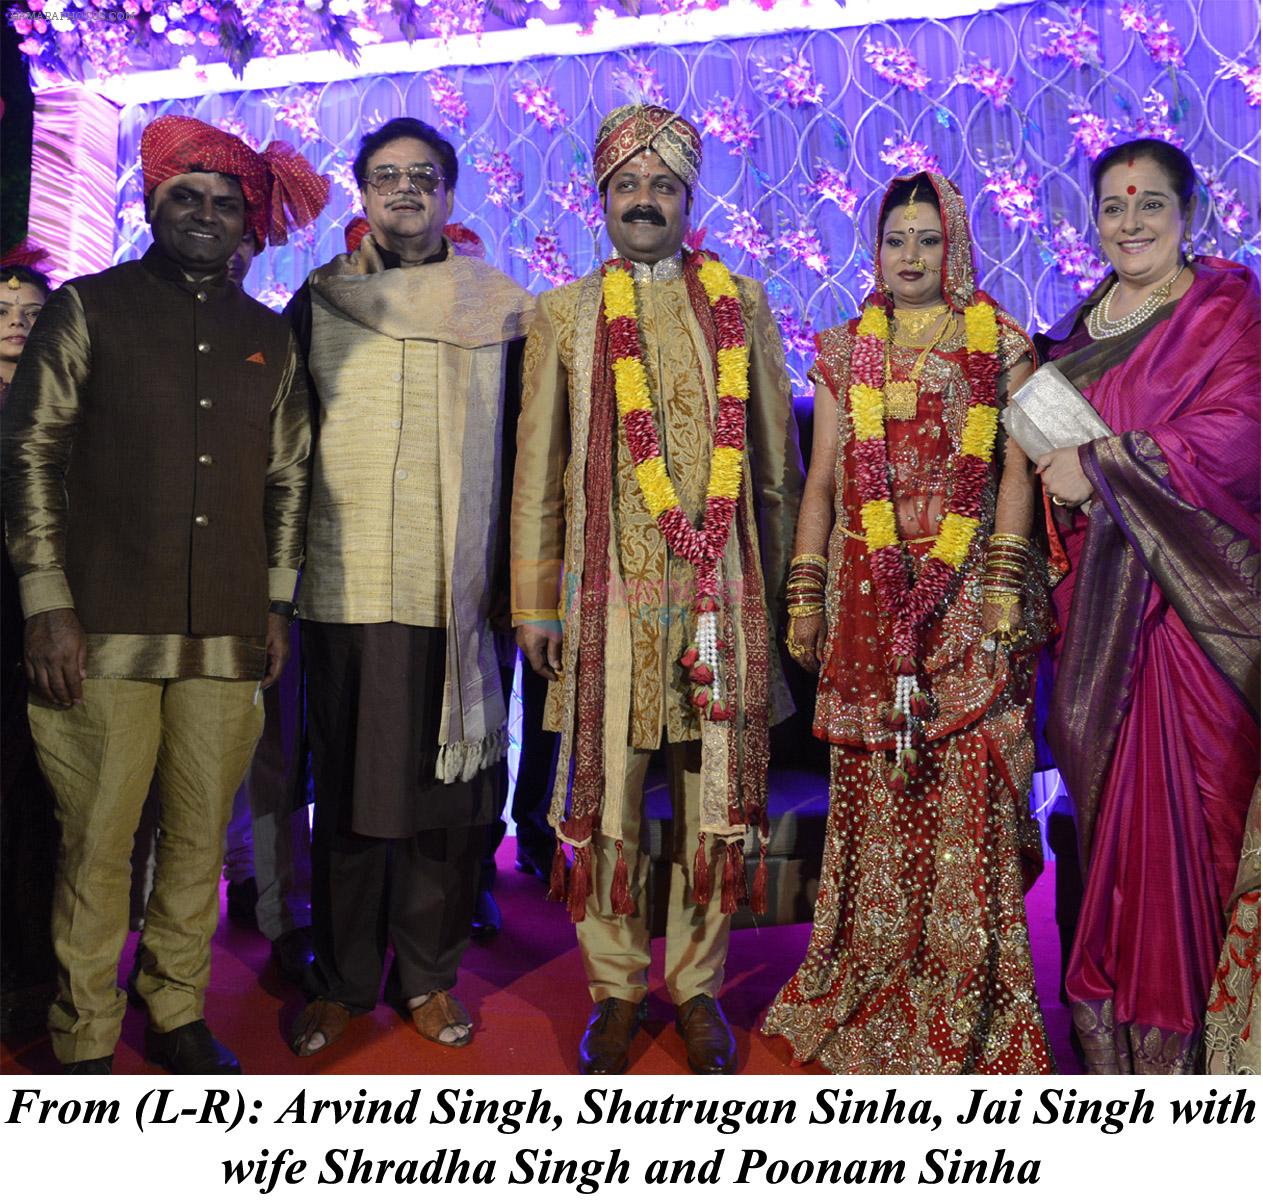 Arvind Singh, Shatrugan Sinha, Jai Singh with wife Shradha Singh and Poonam Sinha at the Reception of Jai Singh and Shradha Singh on 7th May 2013